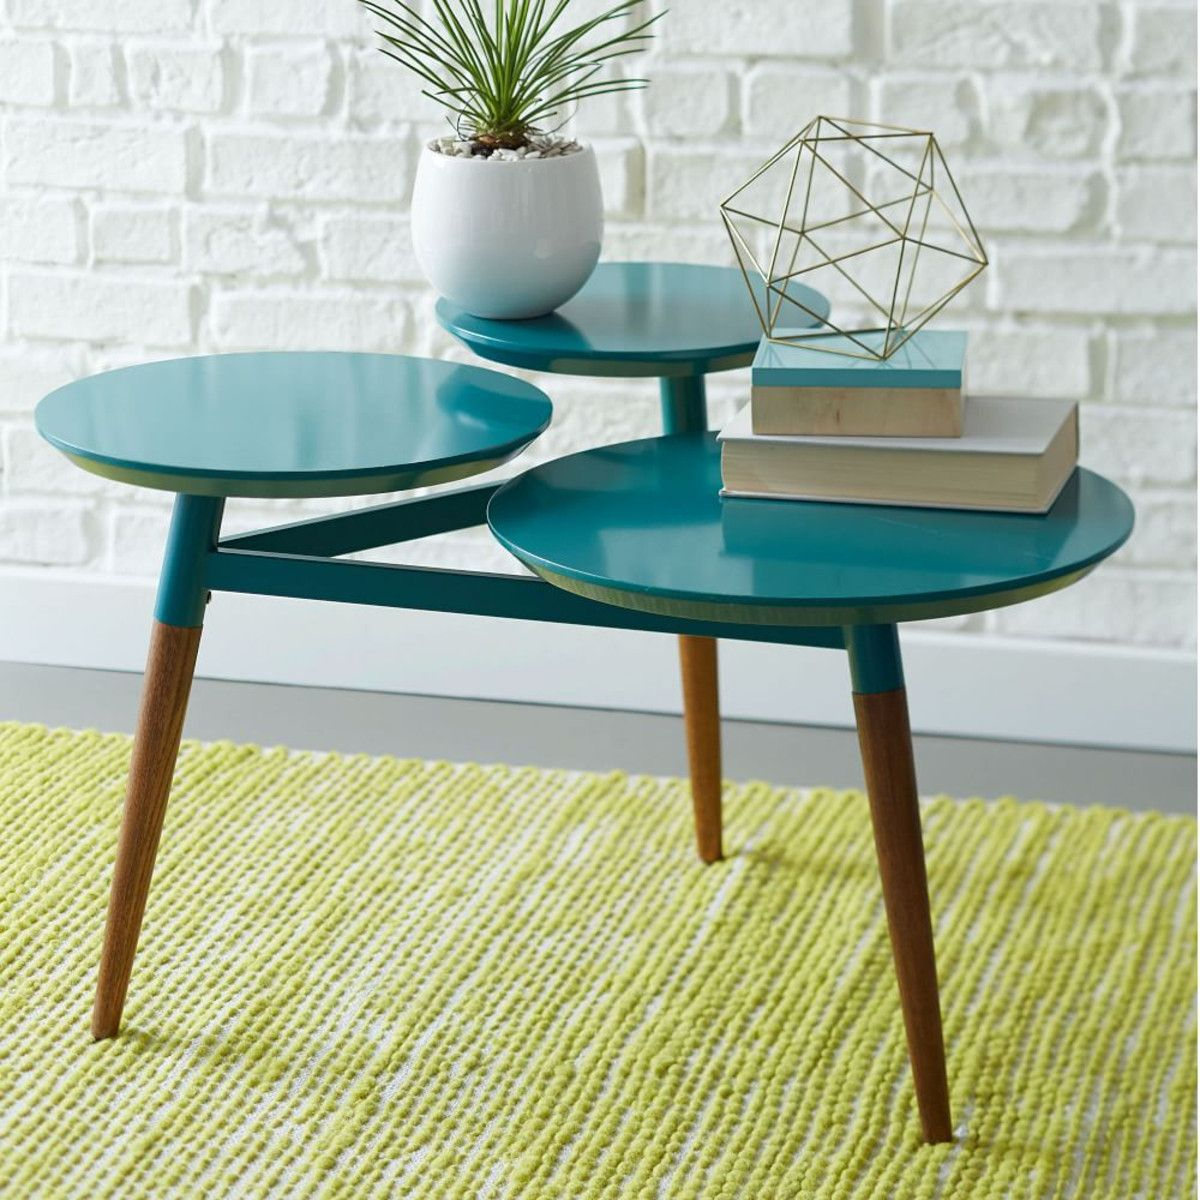 Colorful Sidetable Side Table Design Uniquesidetable Modern Design regarding measurements 1200 X 1200